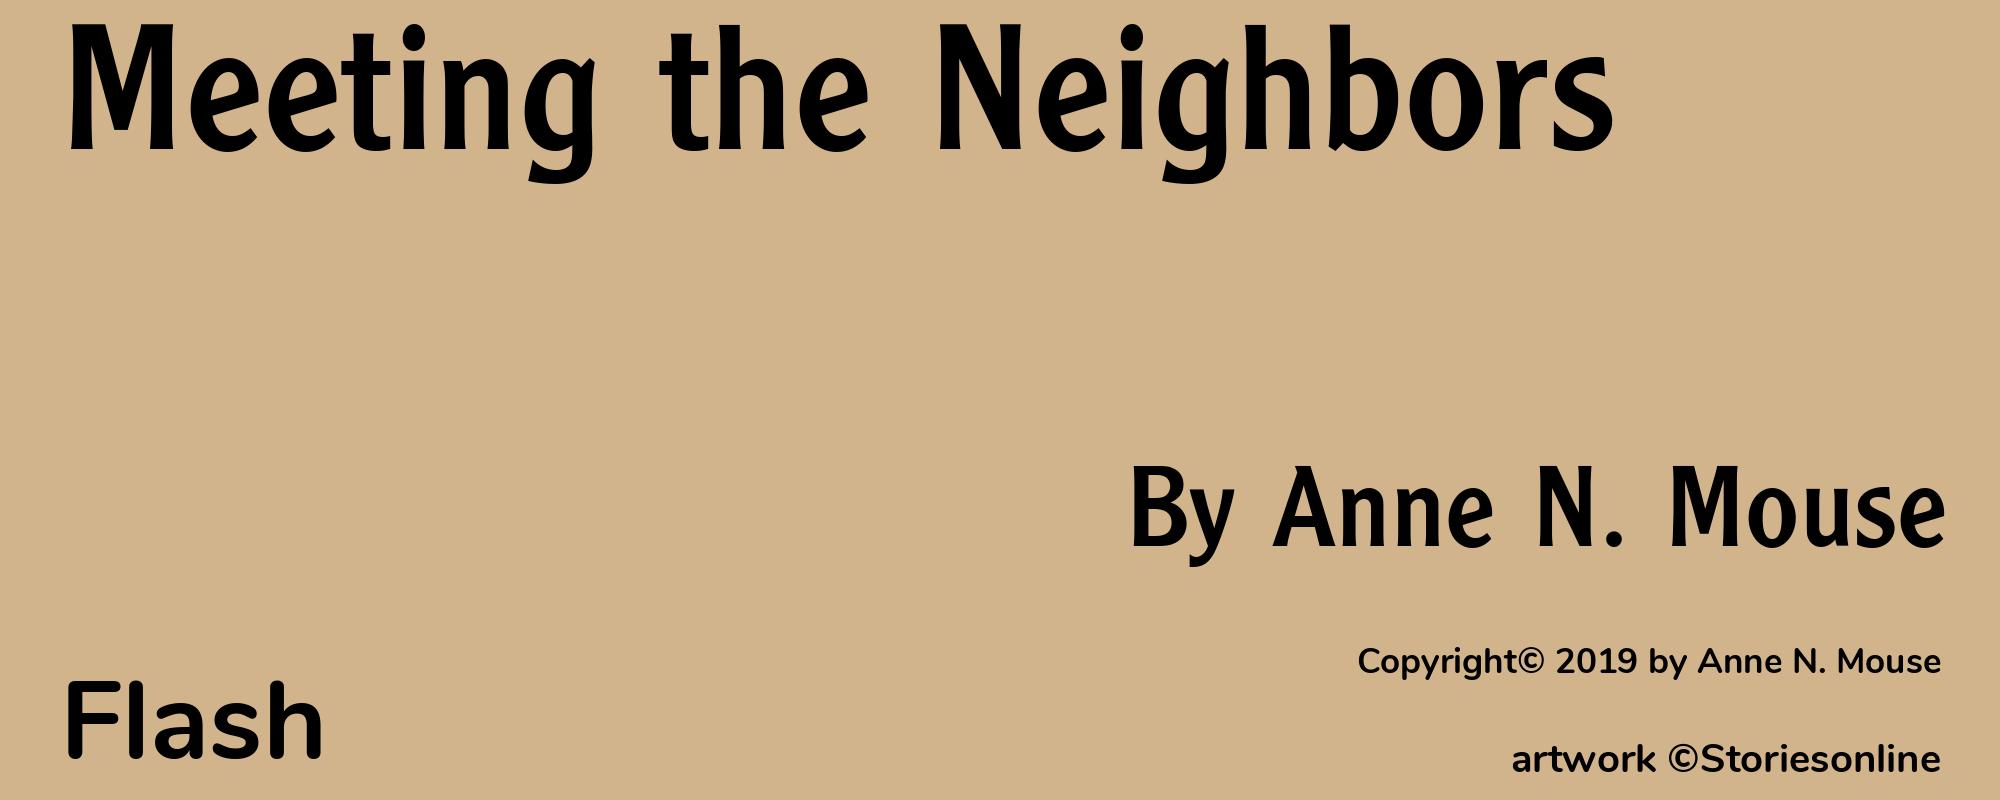 Meeting the Neighbors - Cover